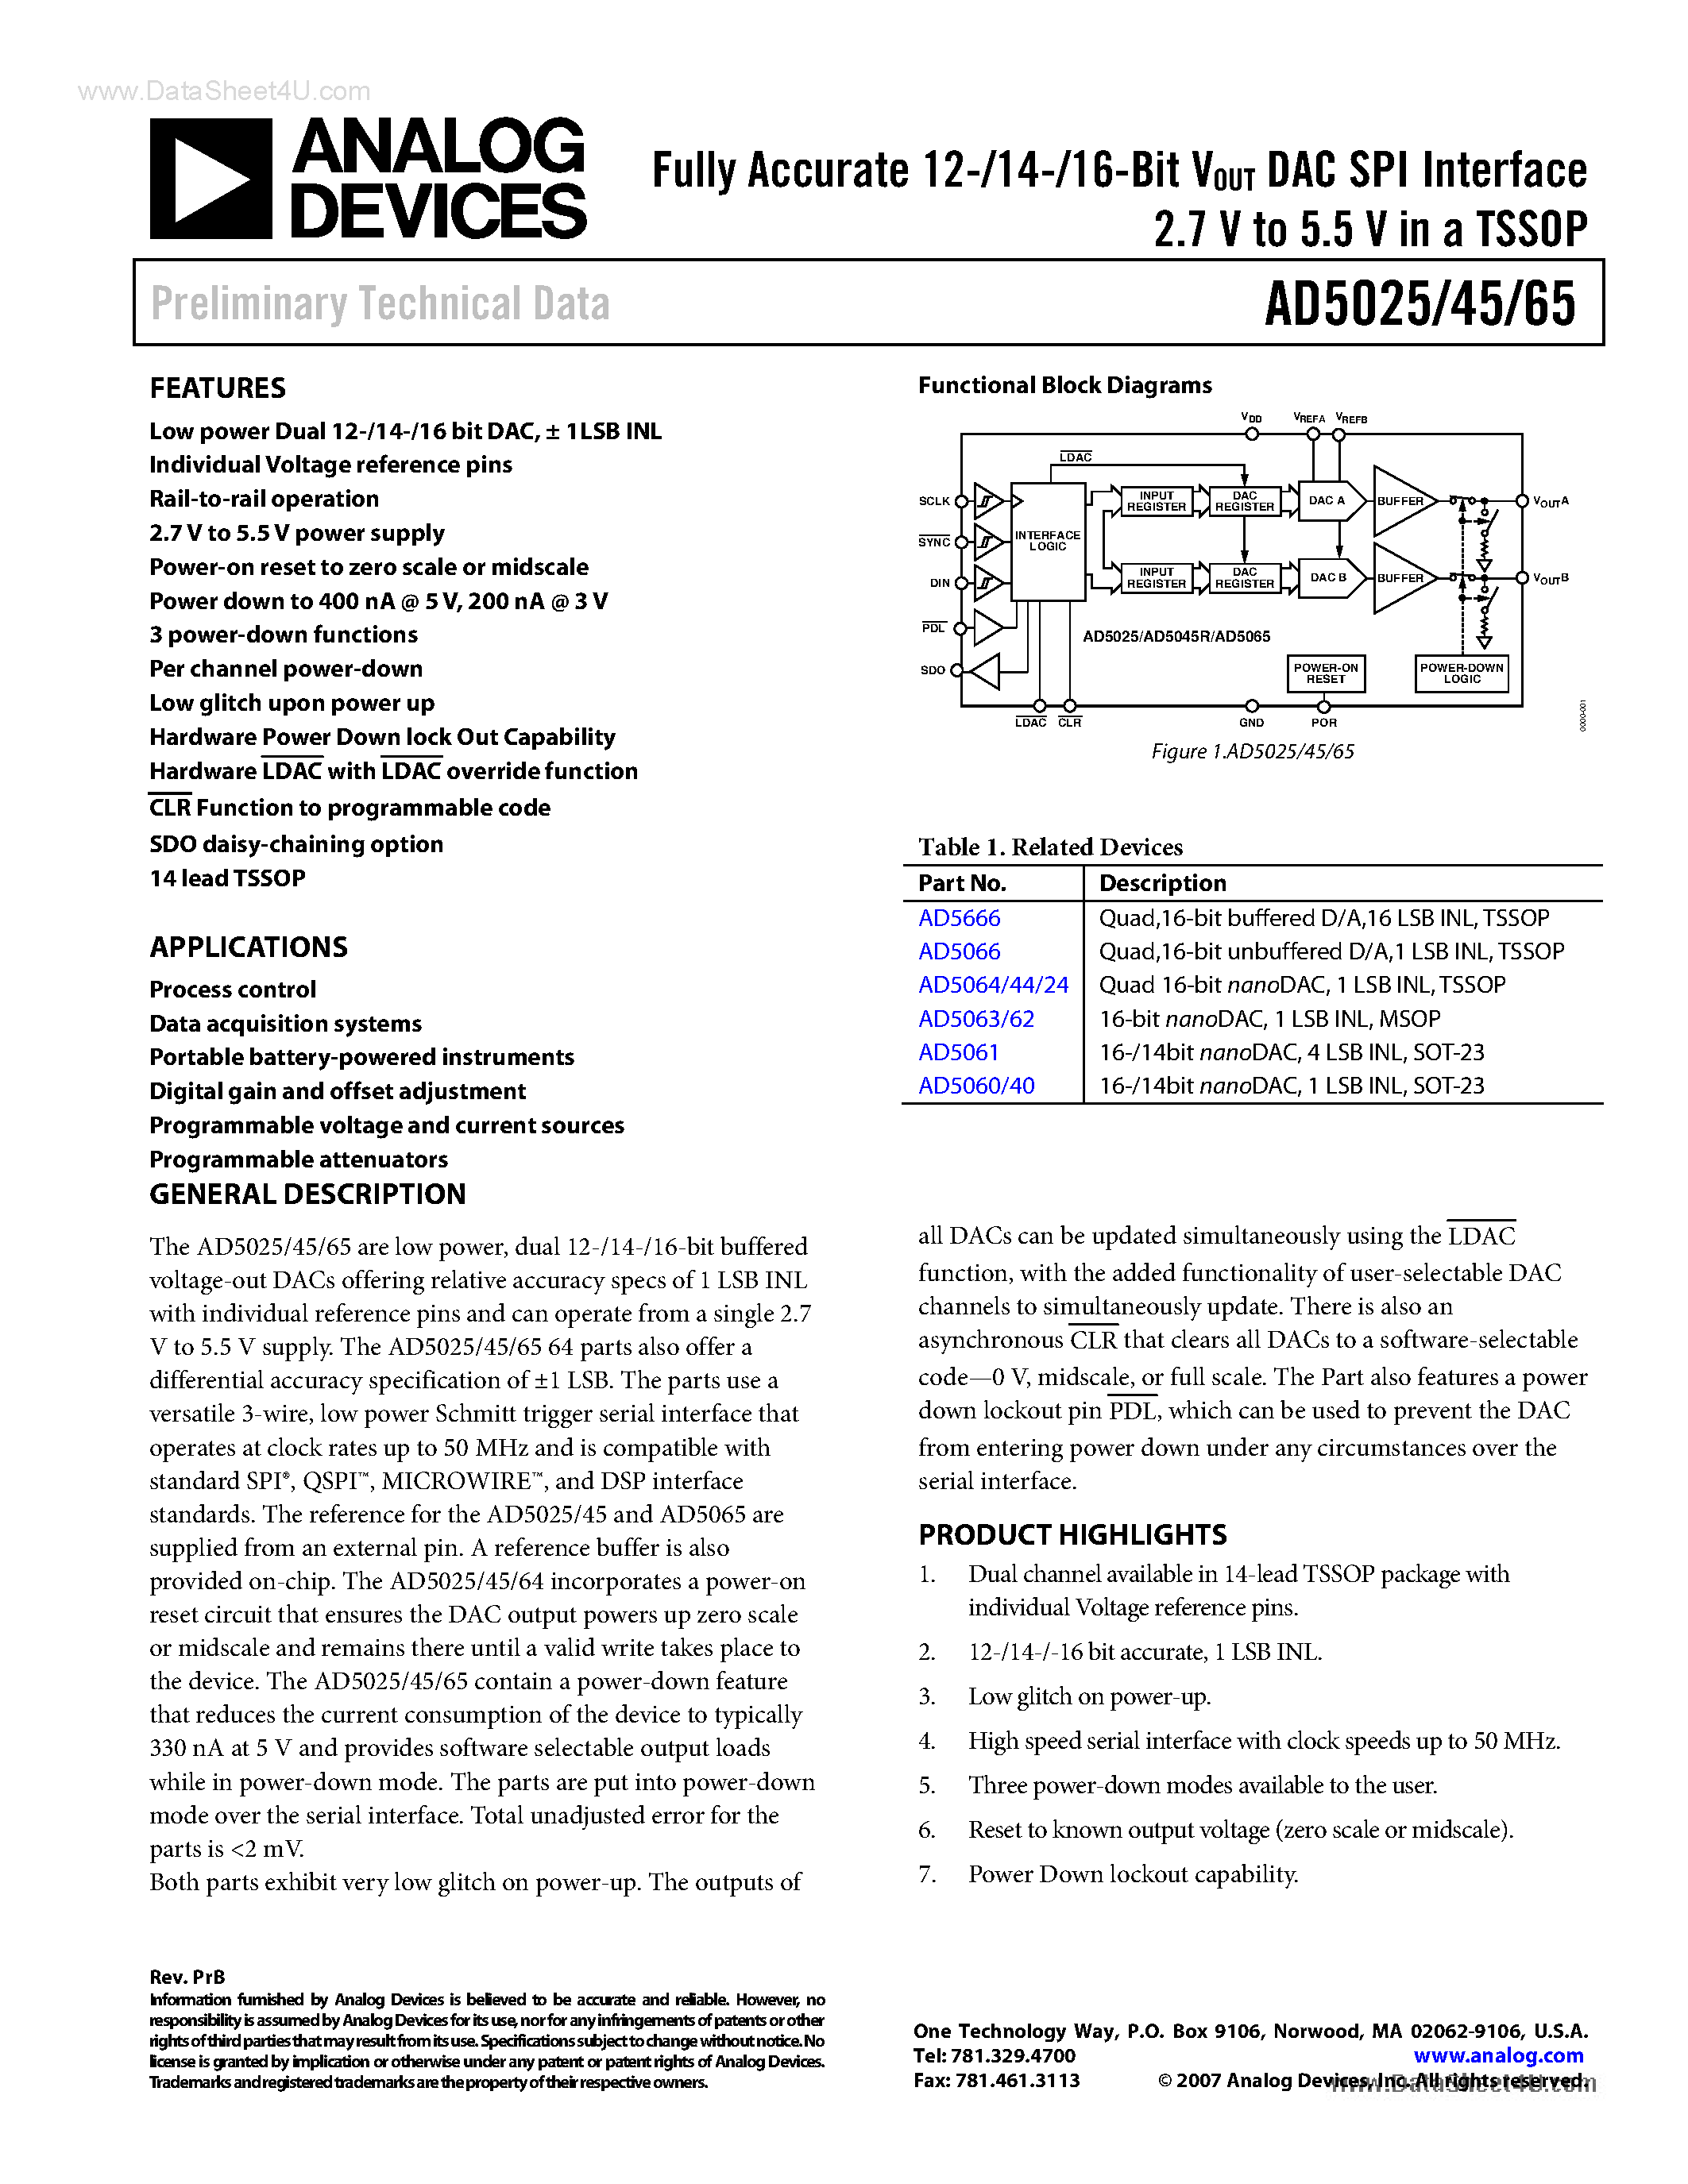 Даташит AD5025 - (AD5025 - AD5065) DAC SPI Interface страница 1